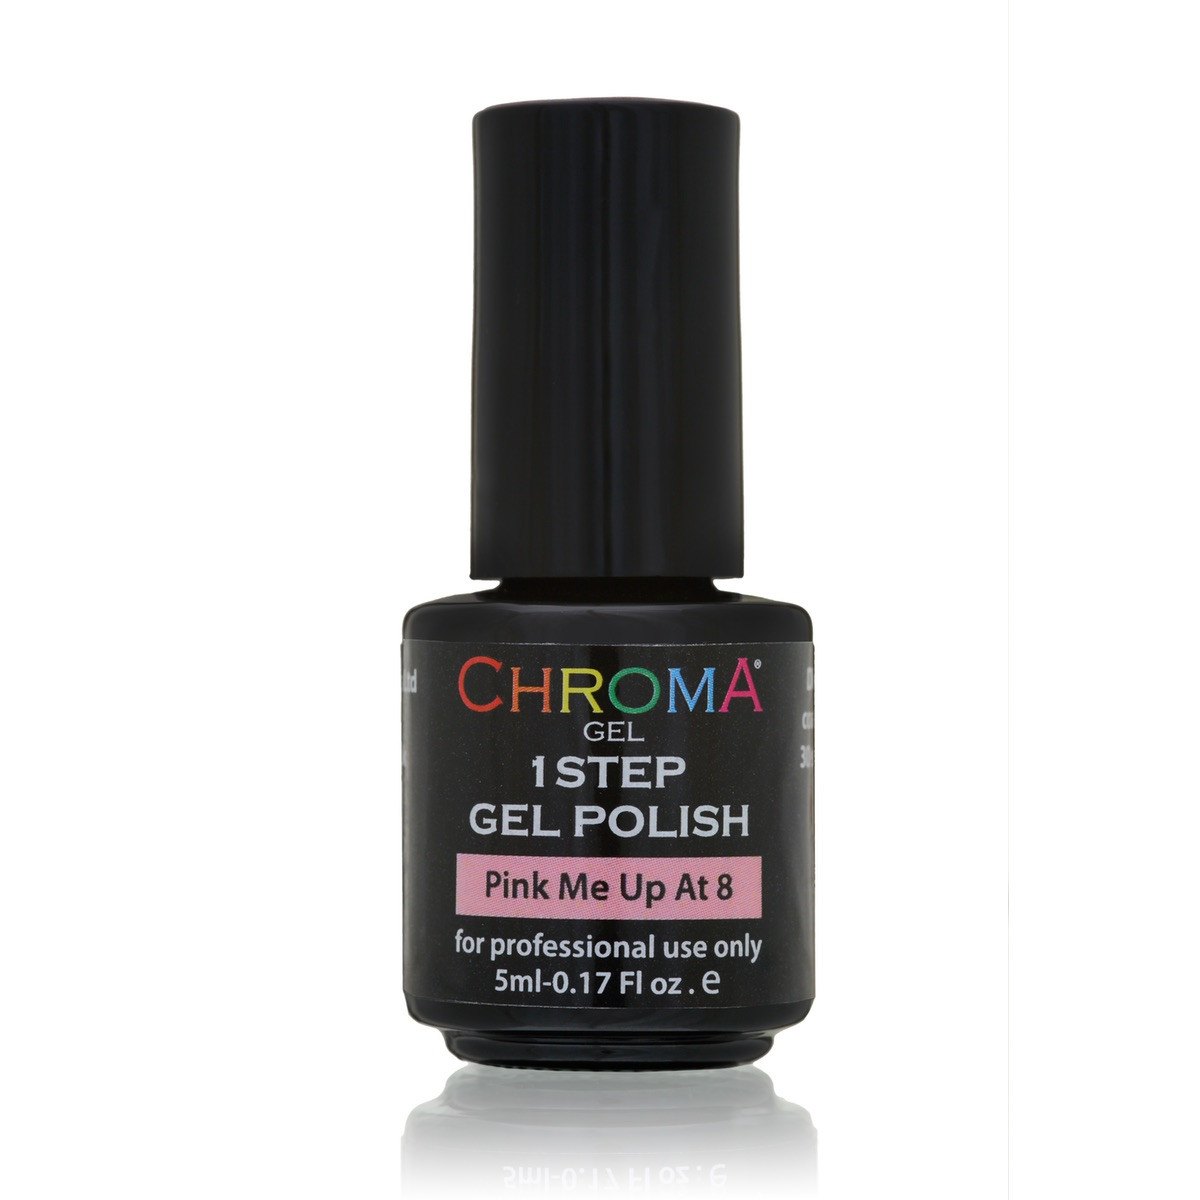 Chroma Gel 1 Step Gel Polish 5ml Pink Me Up At 8 No.56 - Beauty Hair Products LtdChroma Gel